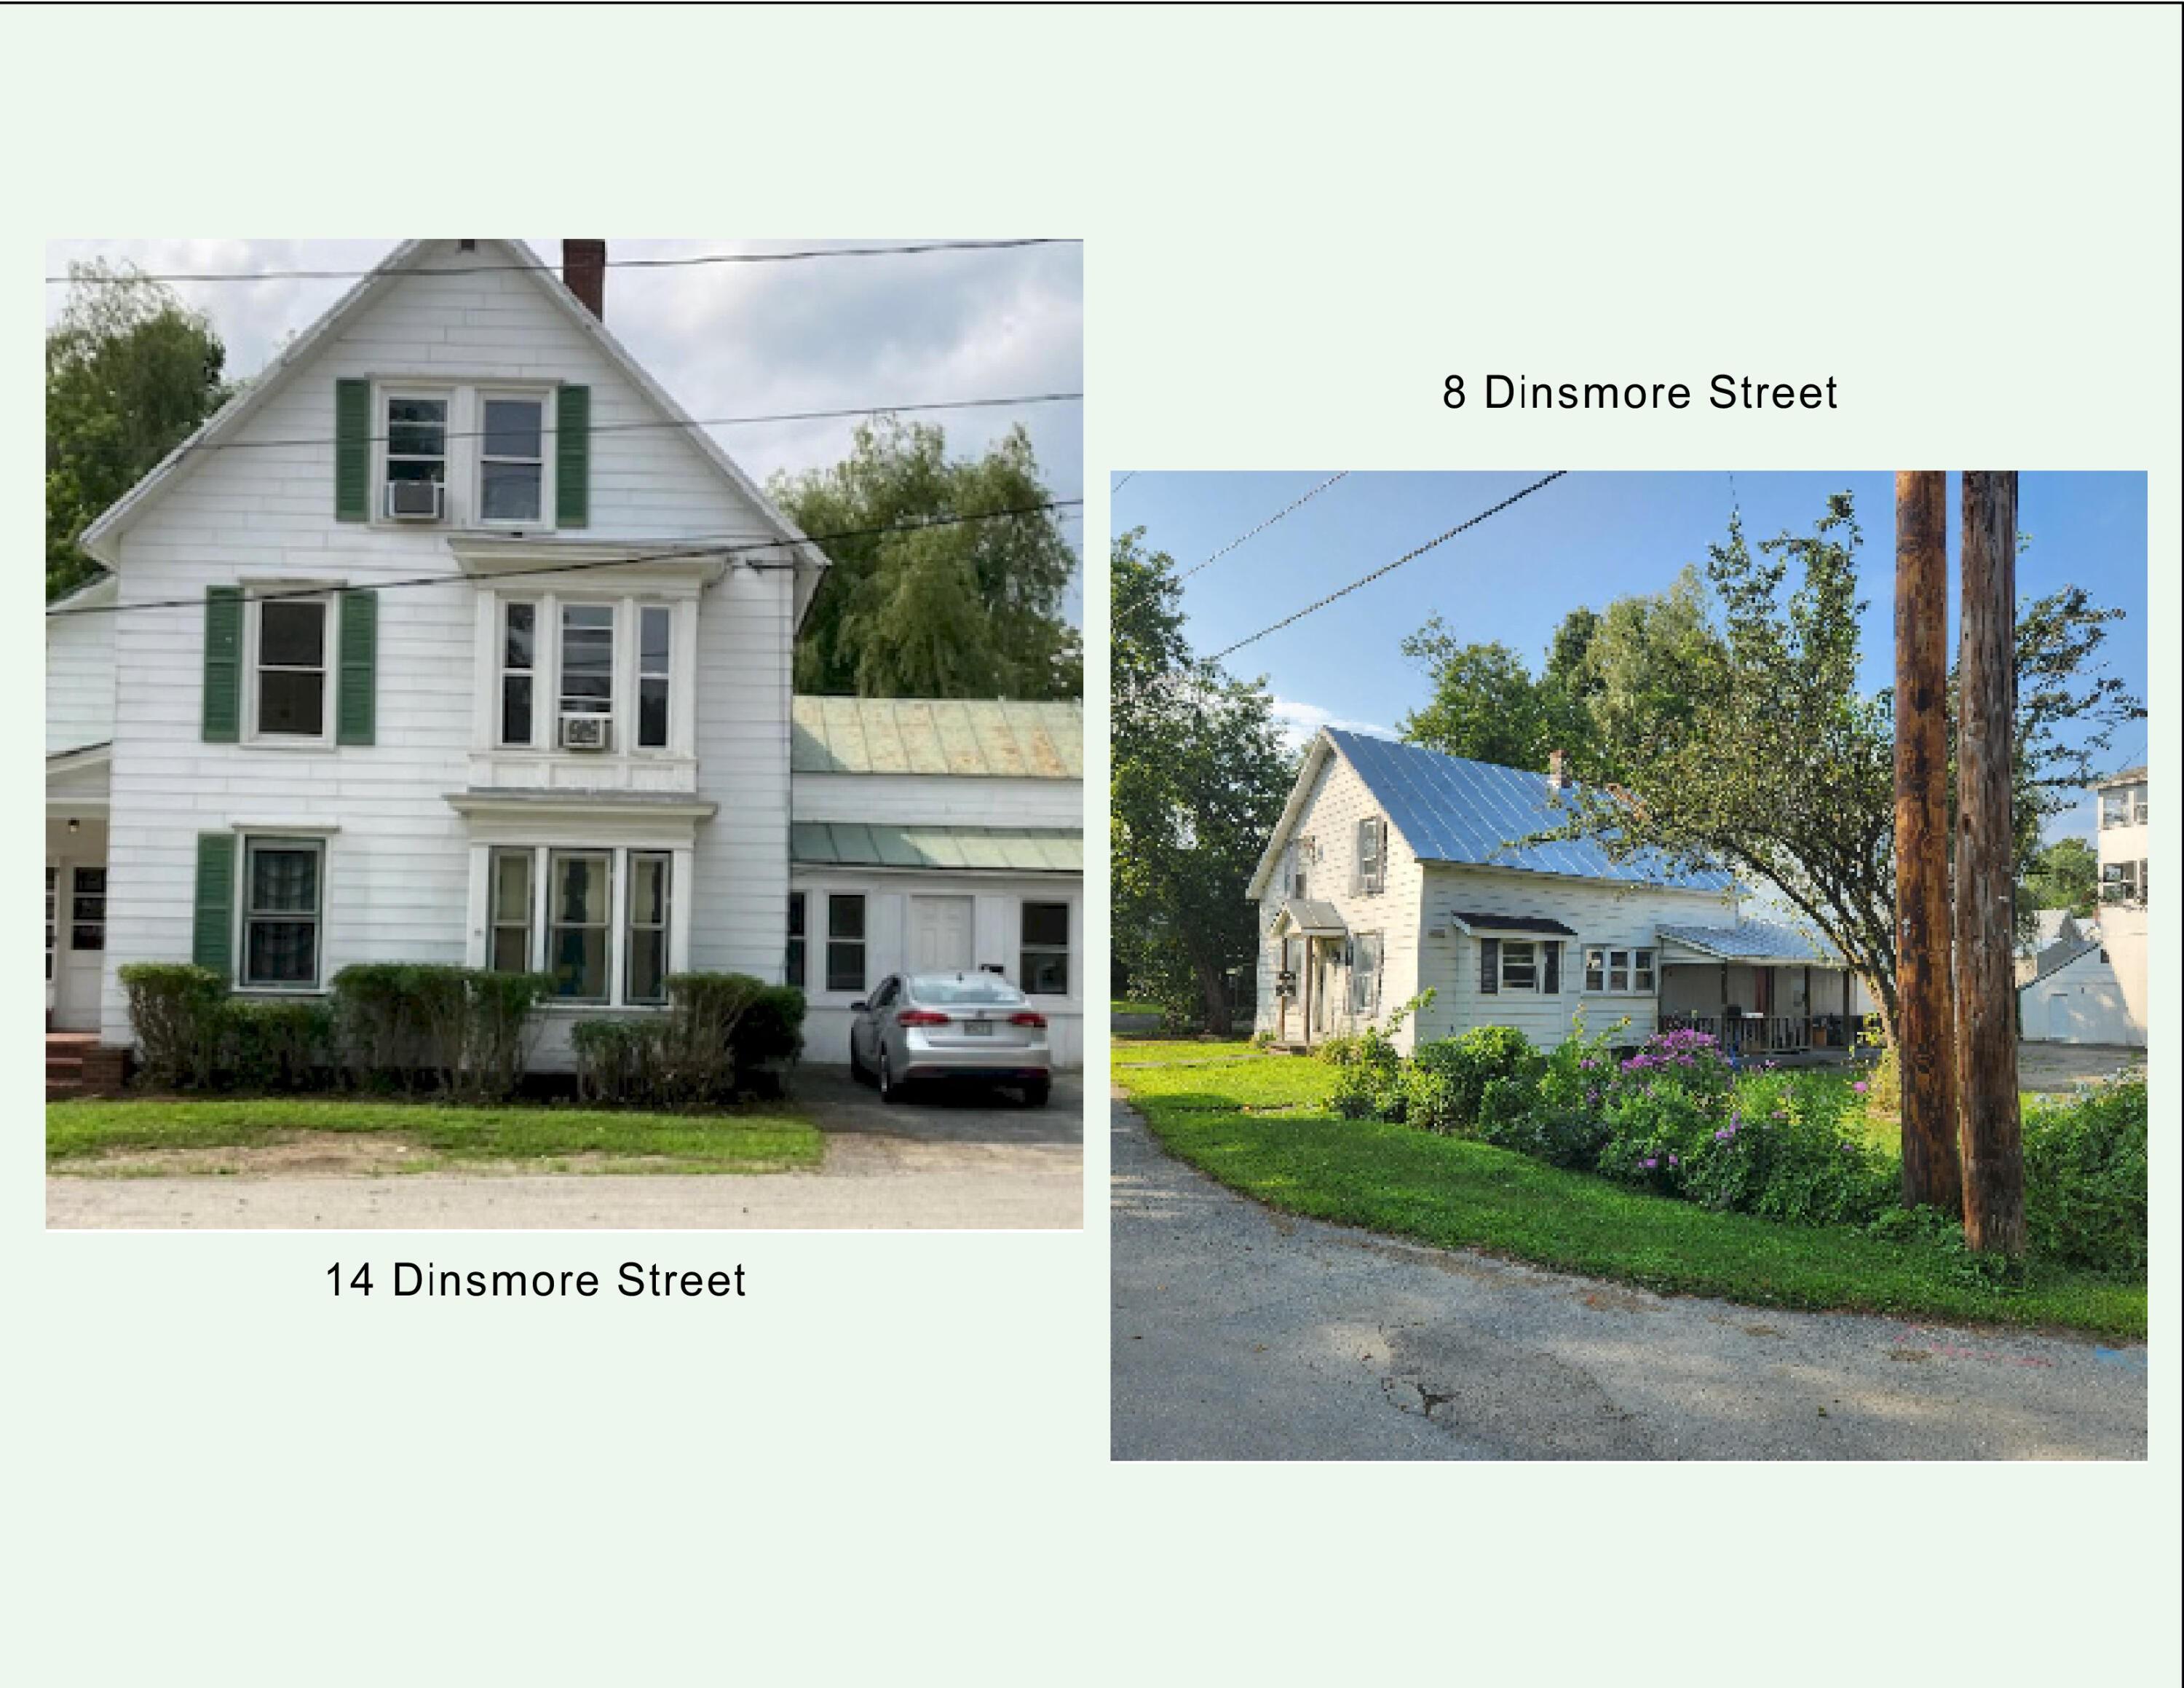 Property Image for 14 Dinsmore Street